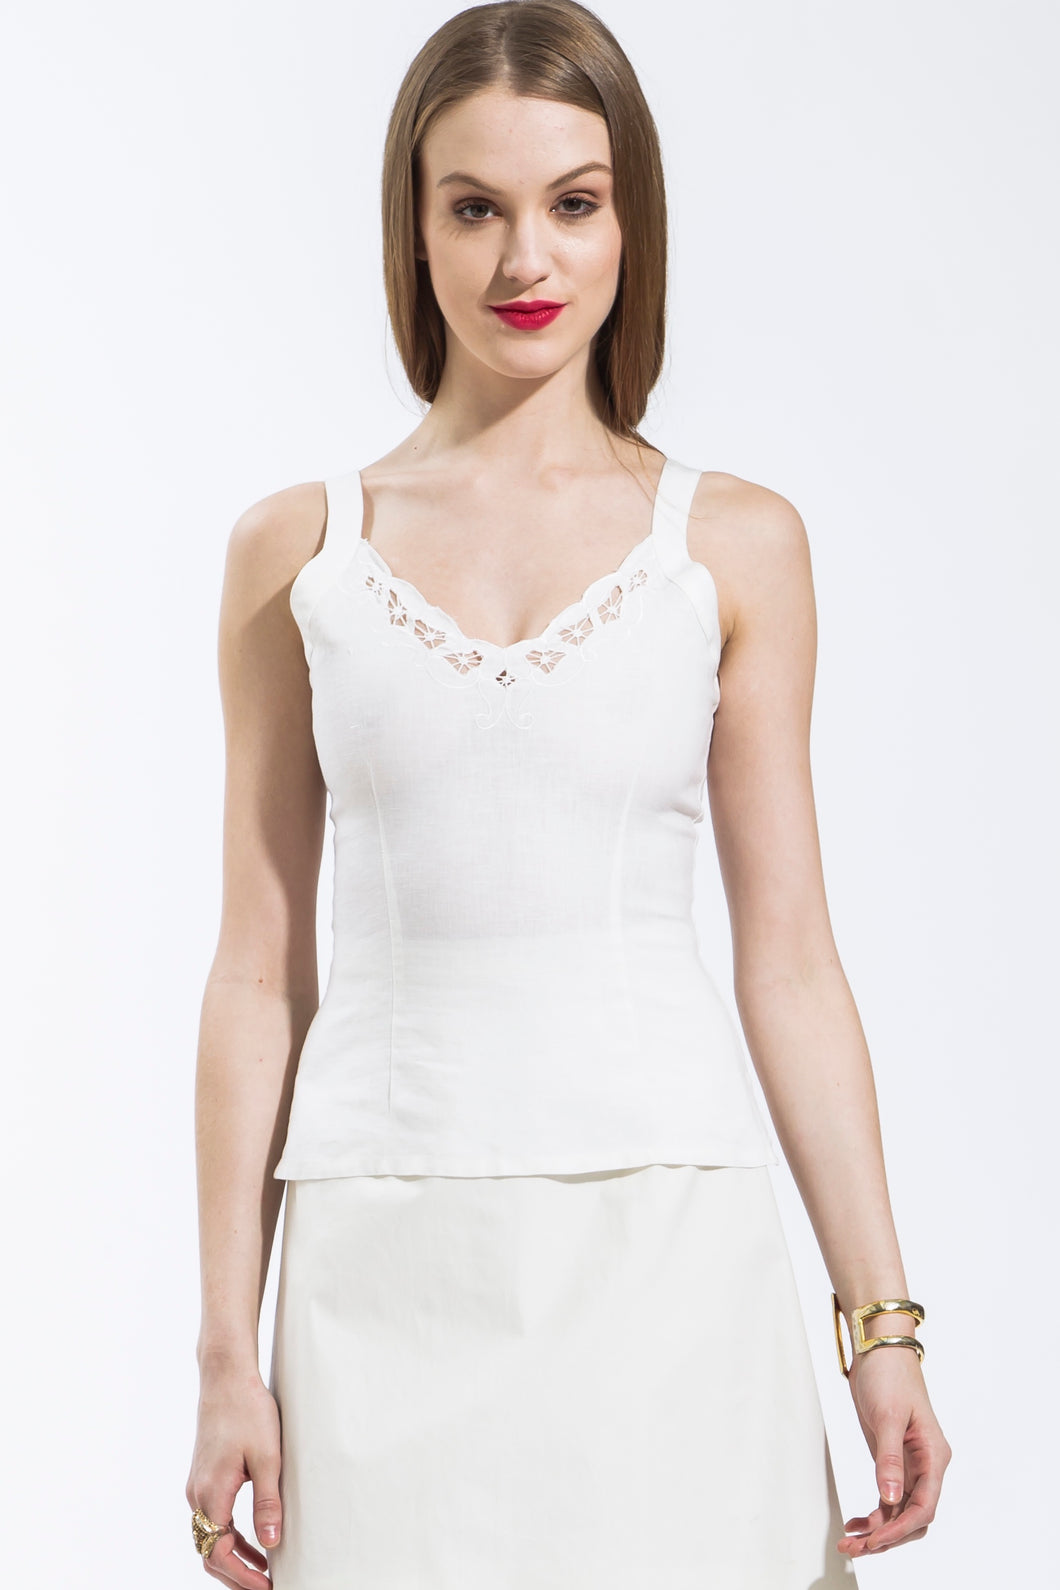 Lace Trim Camisole (White) Style #7230